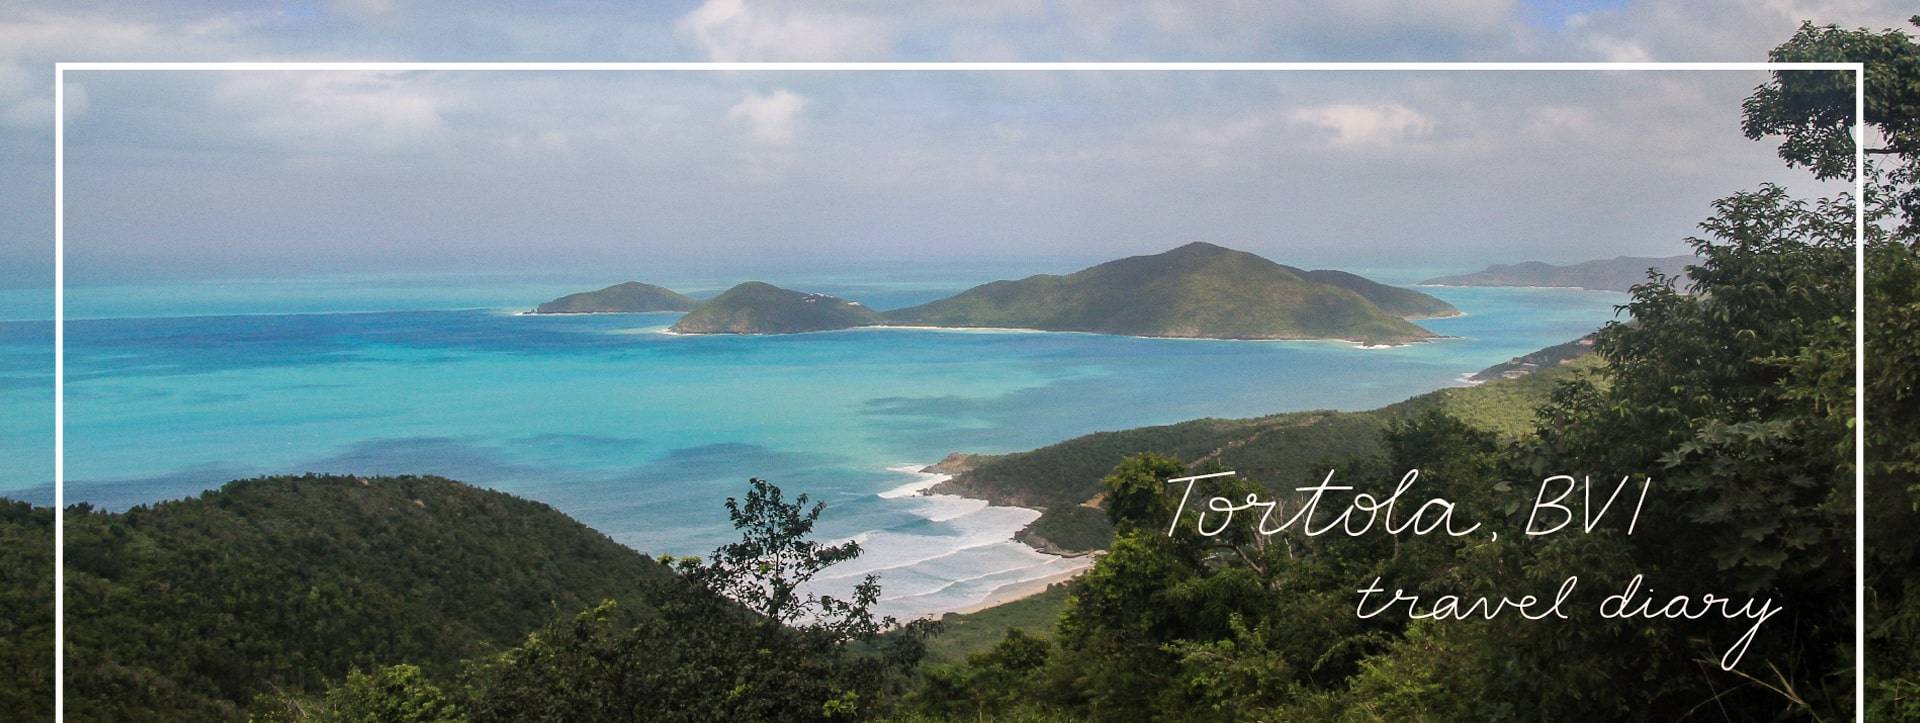 Travel Diary: Tortola, BVI